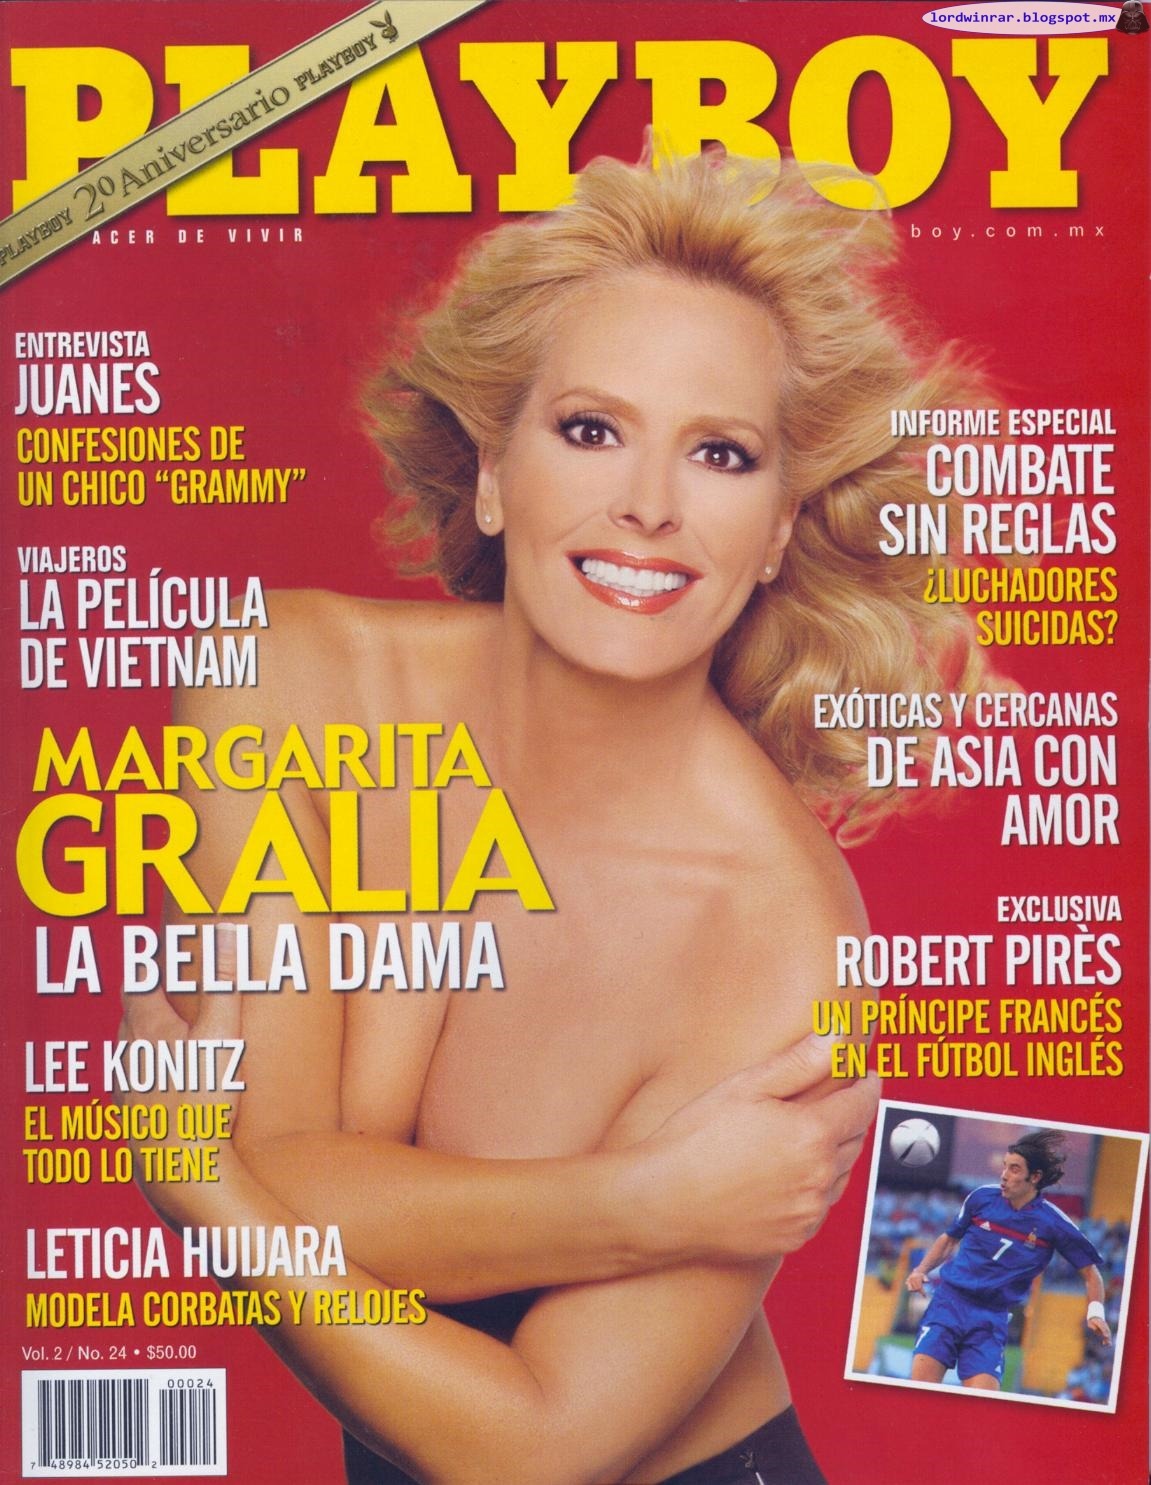   Margarita Gralia - Playboy Mexico 2004 Octubre (35 Fotos)Margarita Gralia desnuda